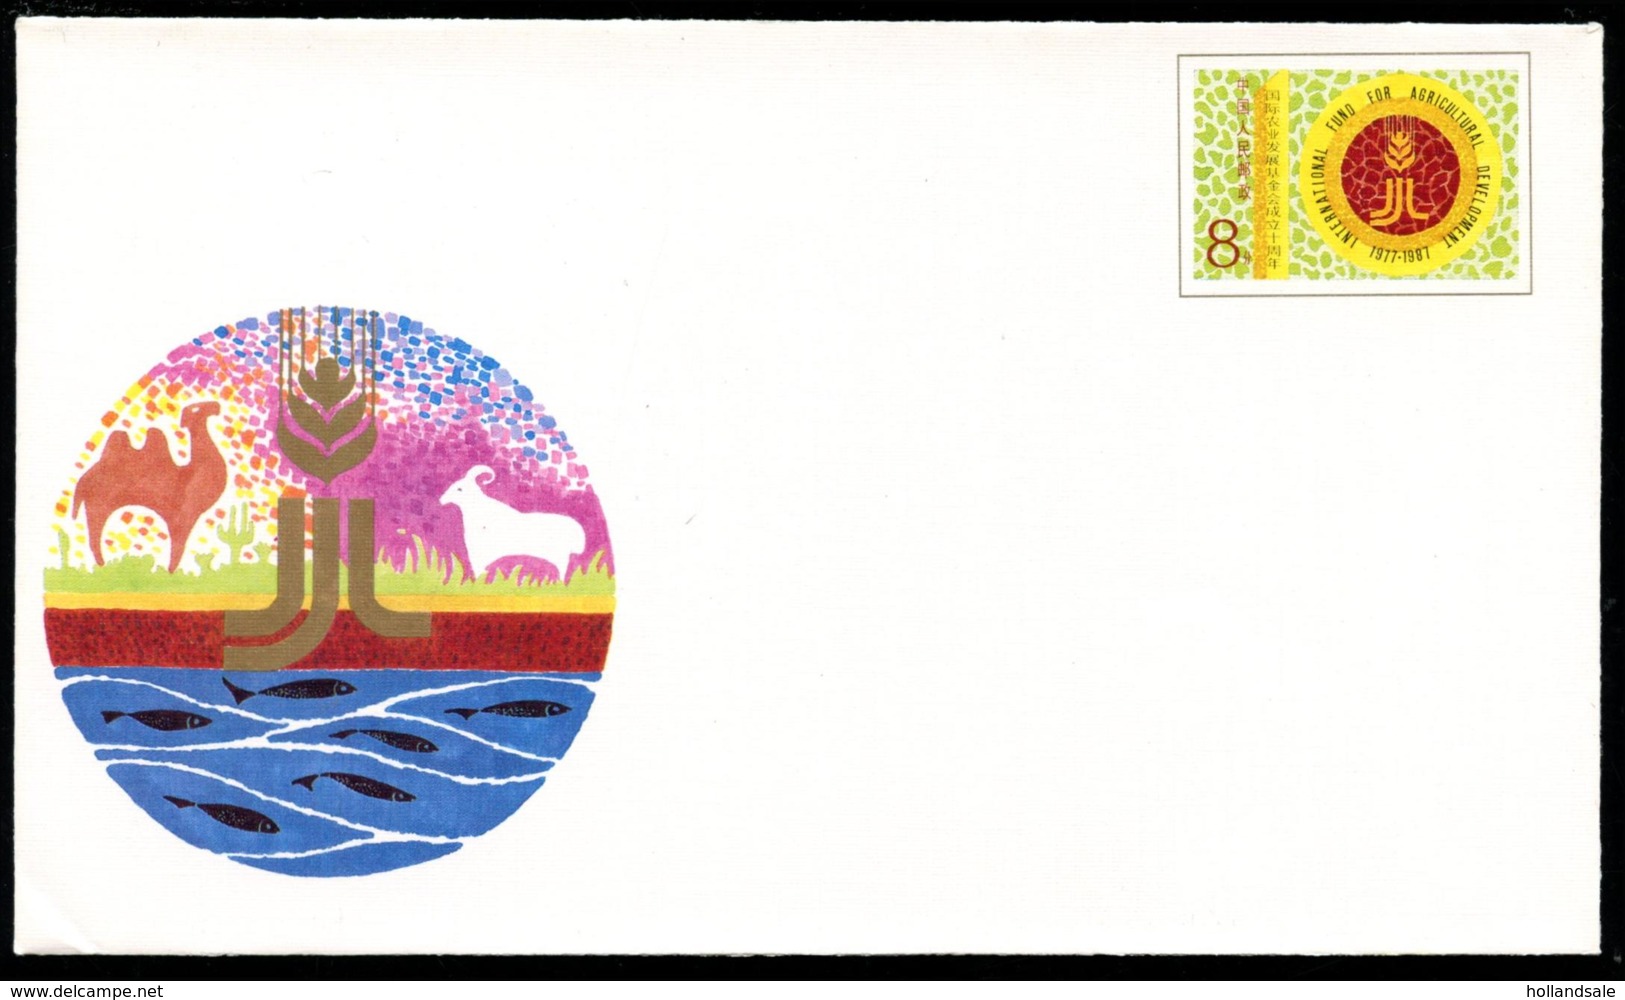 CHINA PRC - Prestamped Cover.   1988  JF 14.  Unused. - Enveloppes